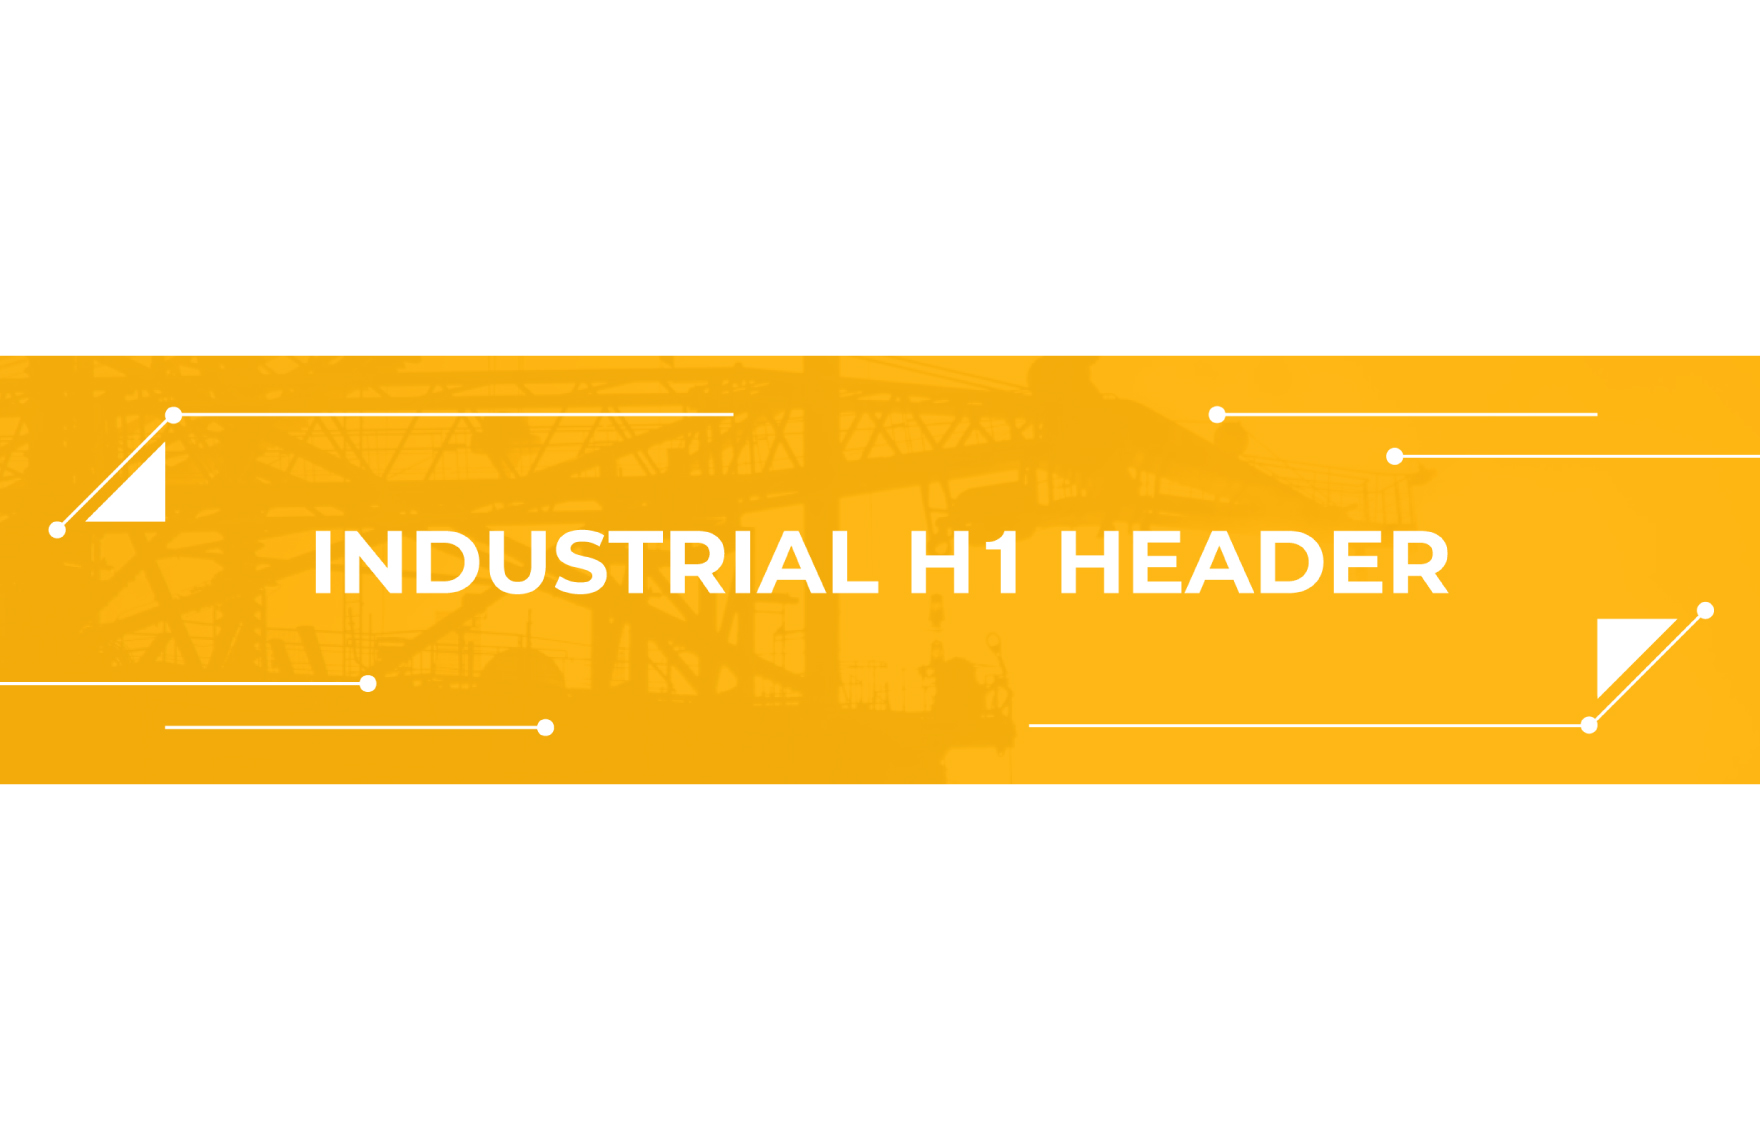 Industrial H1 Header Template